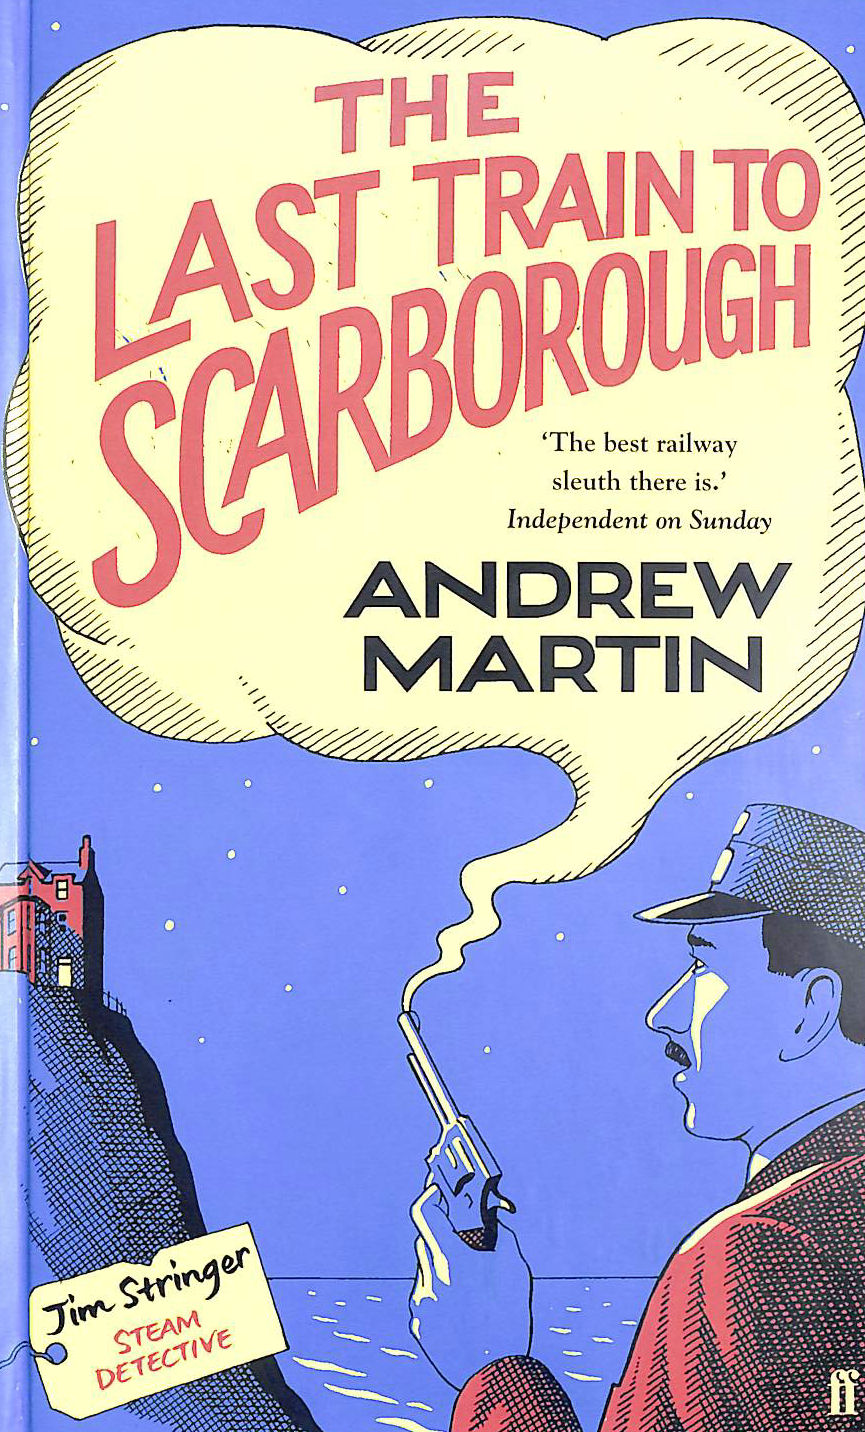 ANDREW MARTIN - The Last Train to Scarborough (Jim Stringer)